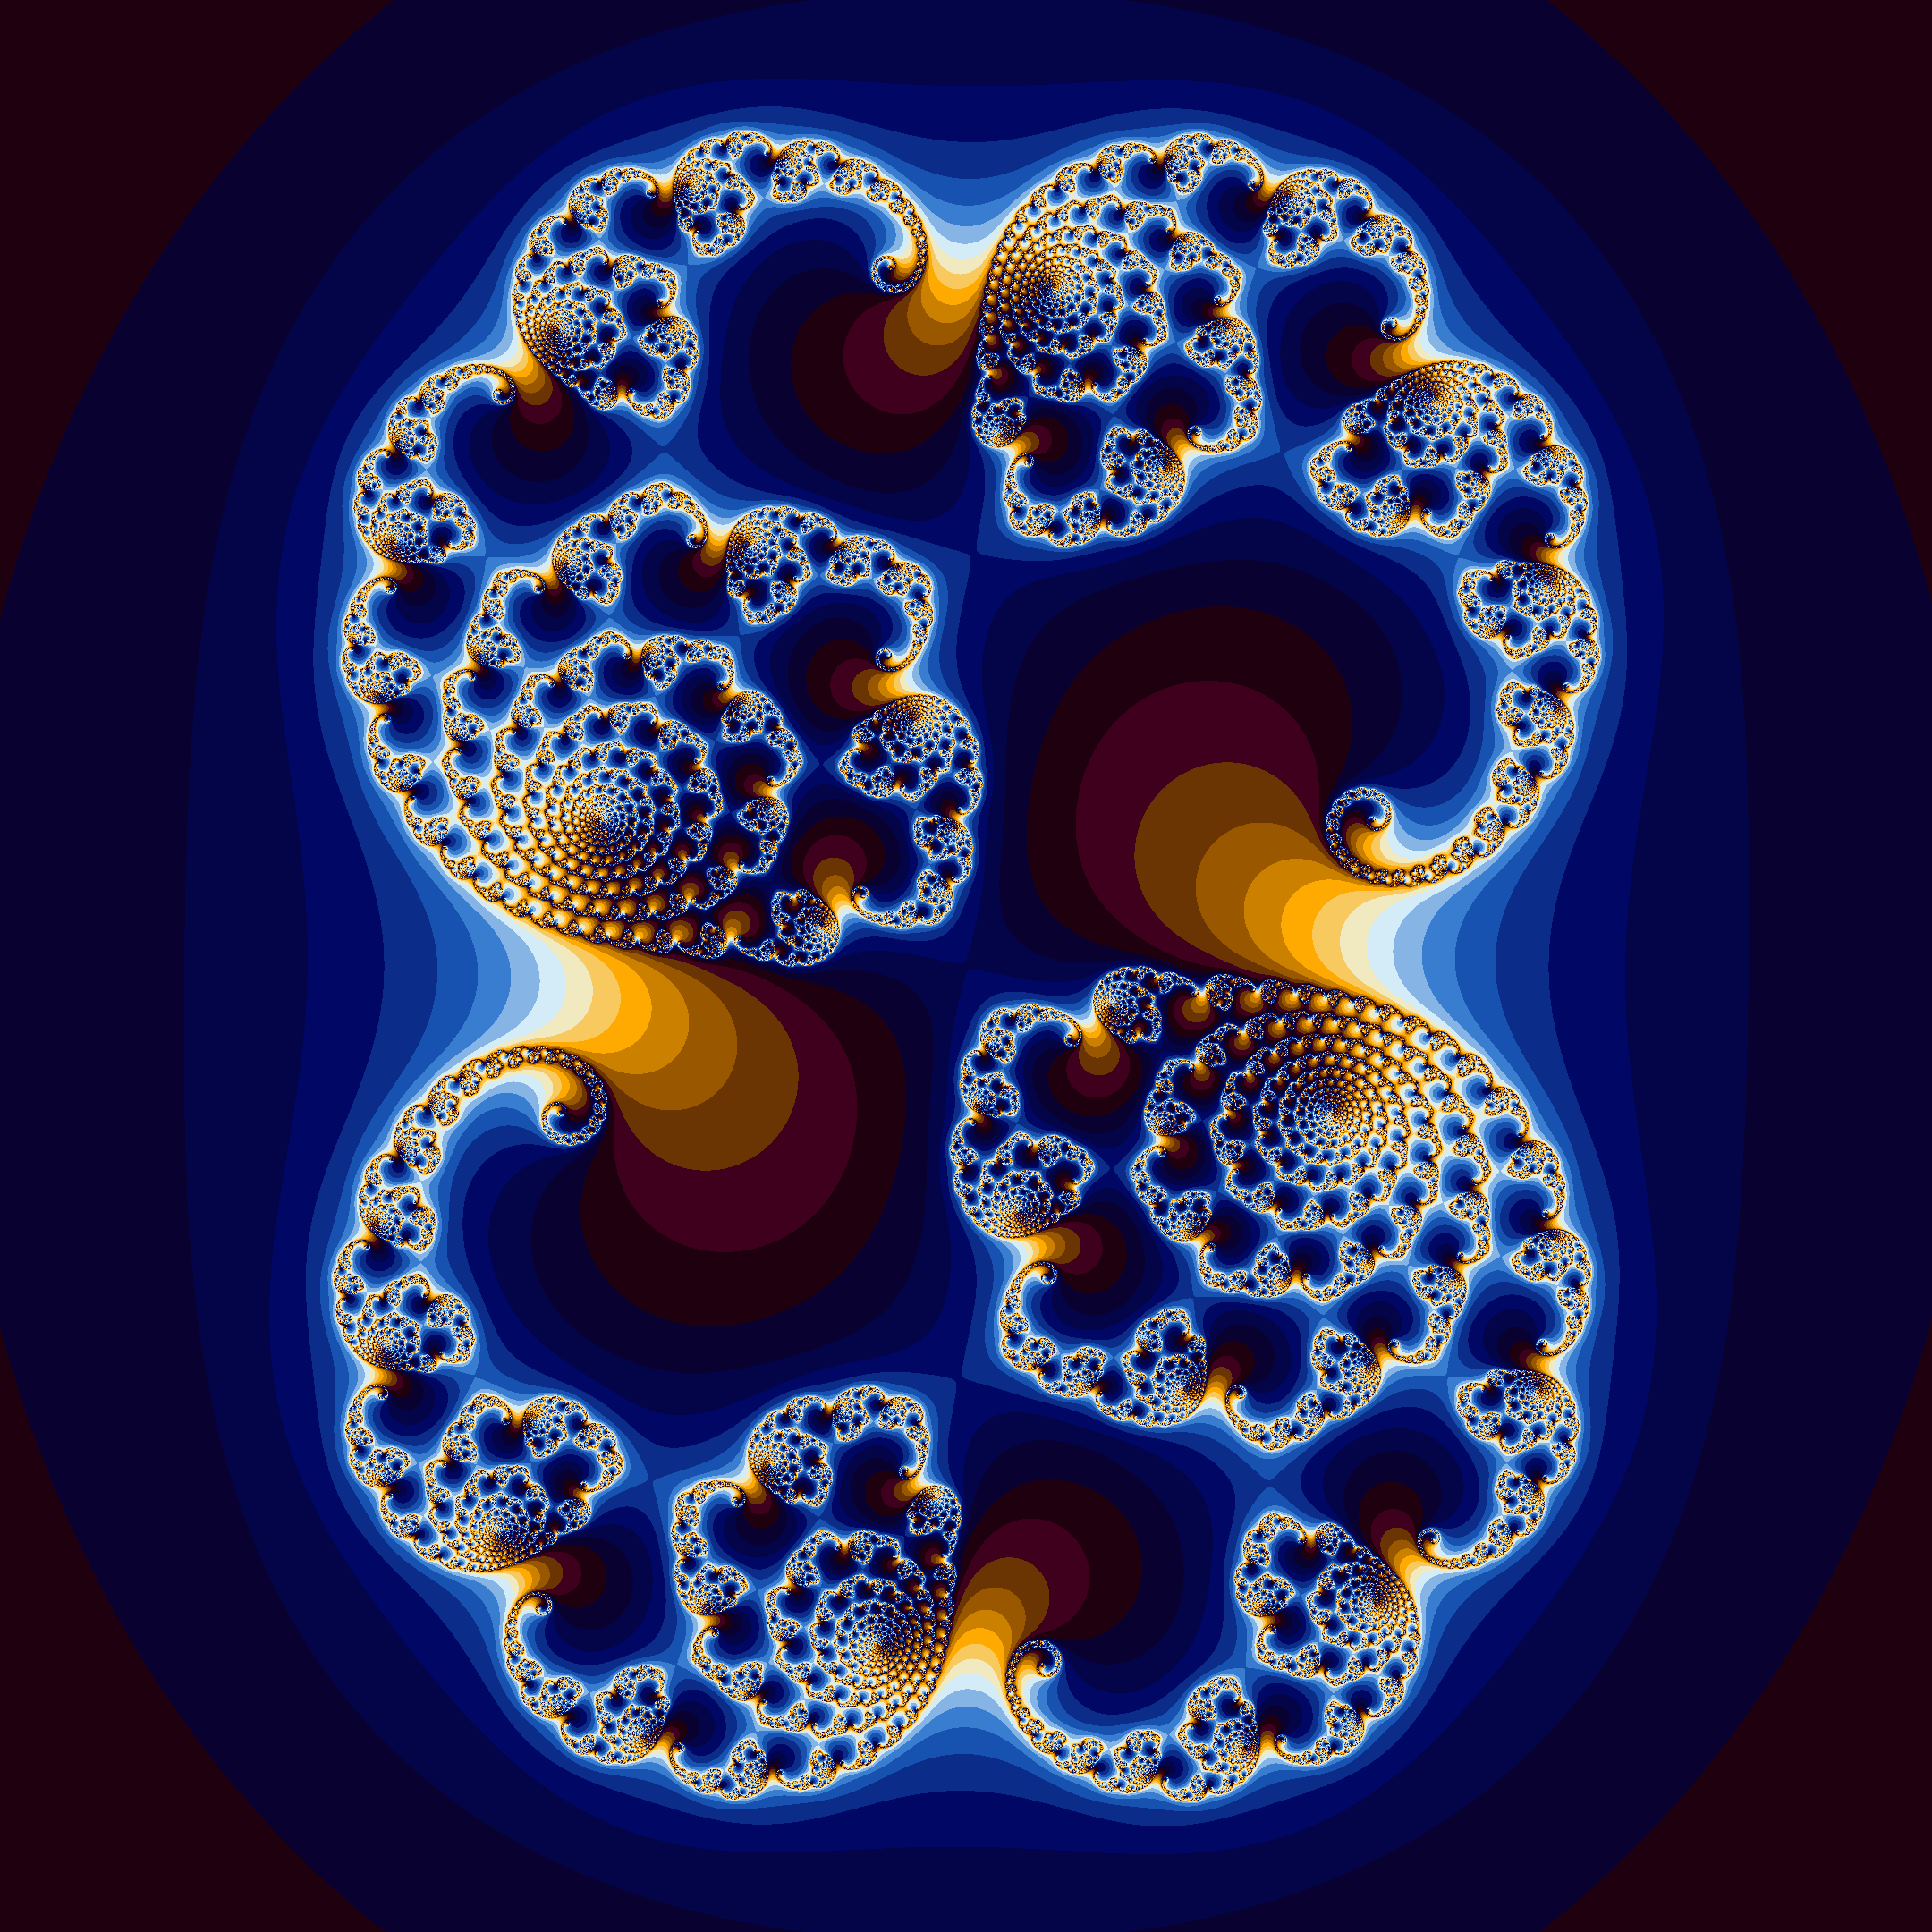 A coloured render of the Julia set for c = 0.285 + 0.01i